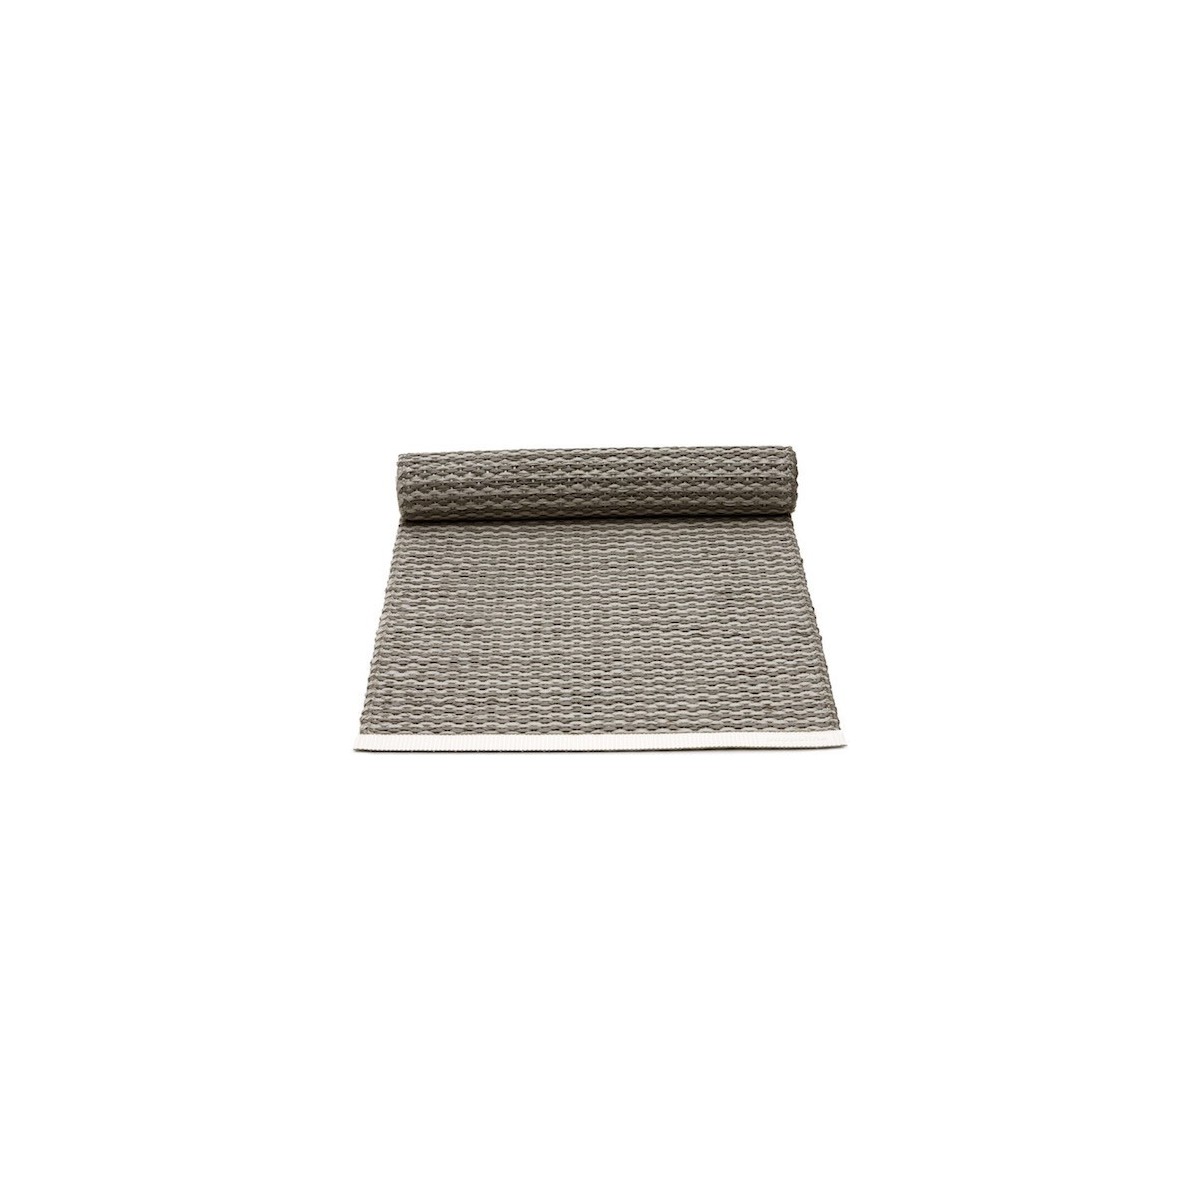 36x150cm - charcoal / warm grey - Mono table runner